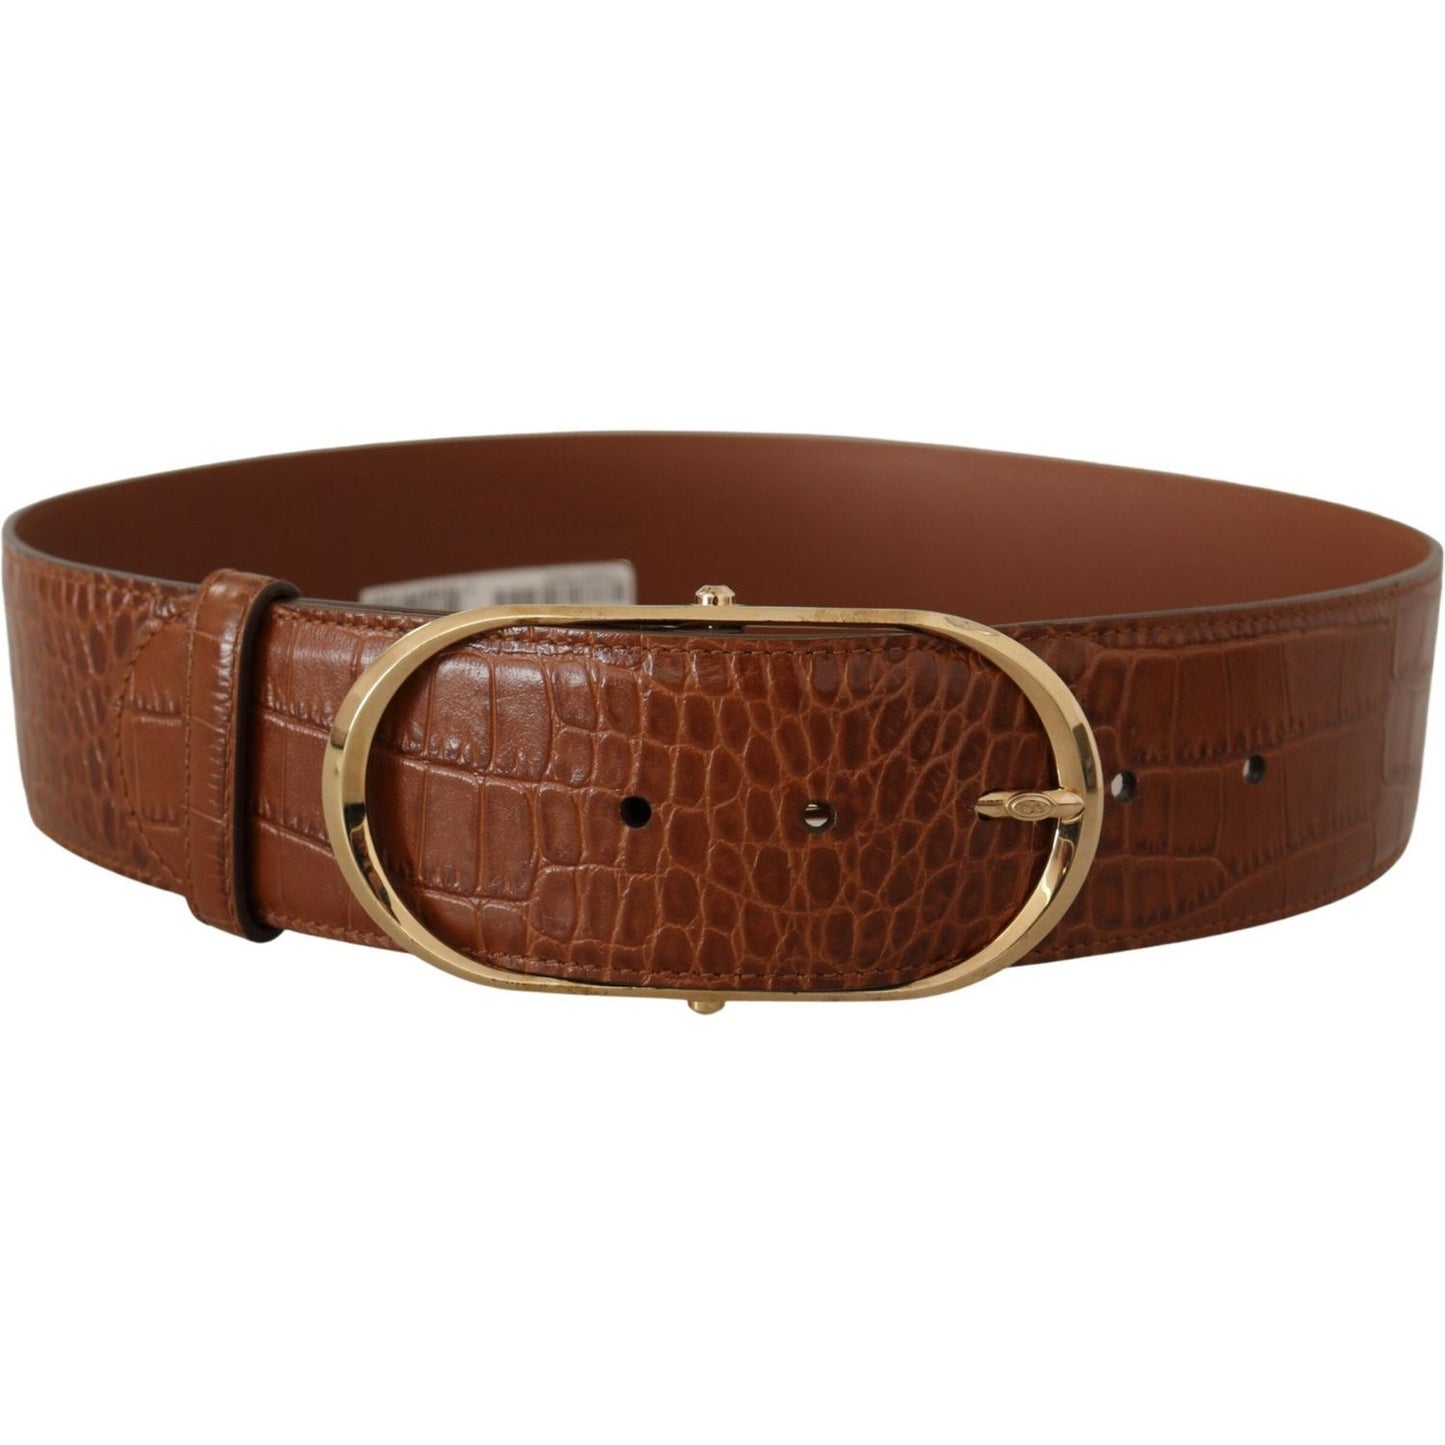 Dolce & Gabbana Enchanting Engraved Logo Leather Belt brown-wide-waist-leather-gold-oval-metal-buckle-belt IMG_9076-scaled-2f542ee7-2c0.jpg